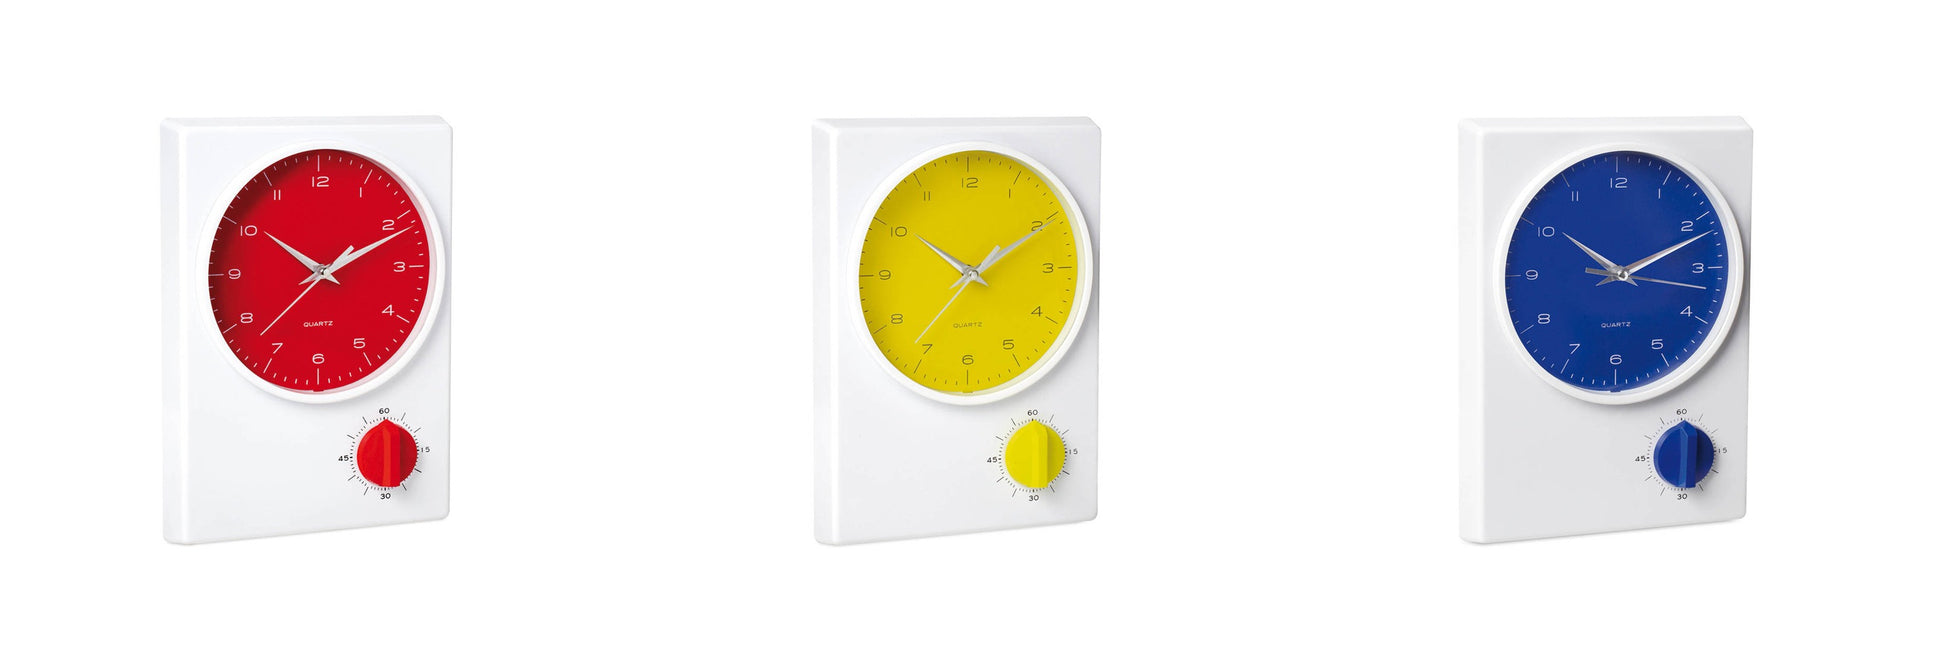 Horloge minuterie - Dimensions : 17.8 x 24.7 x 4.4 cm